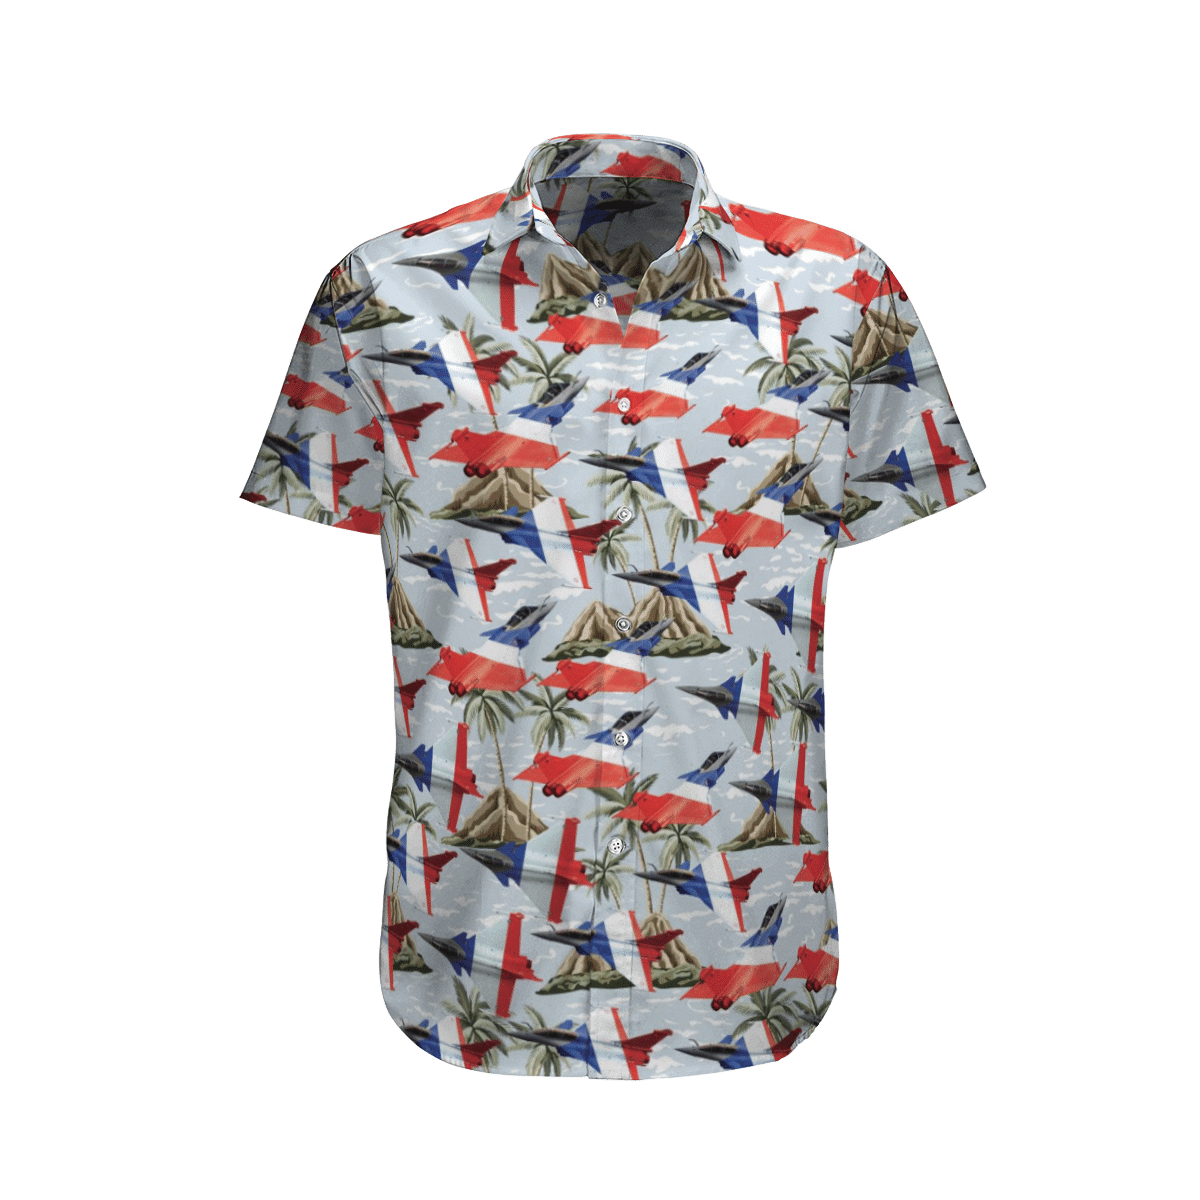 Get a new Hawaiian shirt to enjoy summer vacation 157